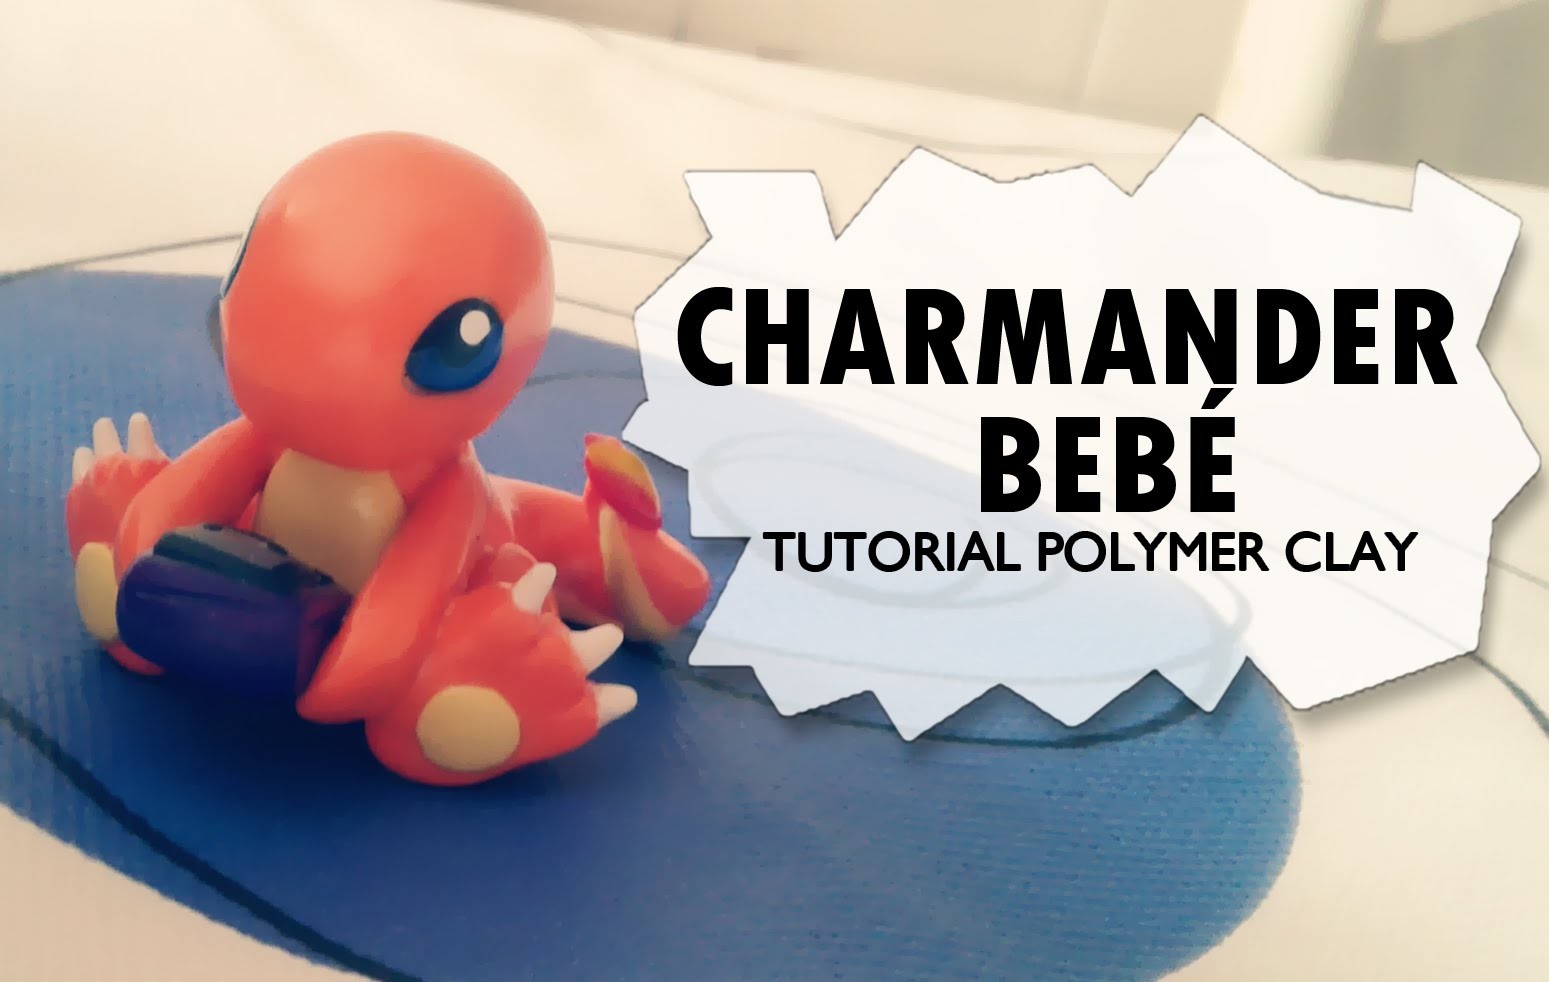 Baby Charmander Polymer Clay Tutorial. Charmander Bebé